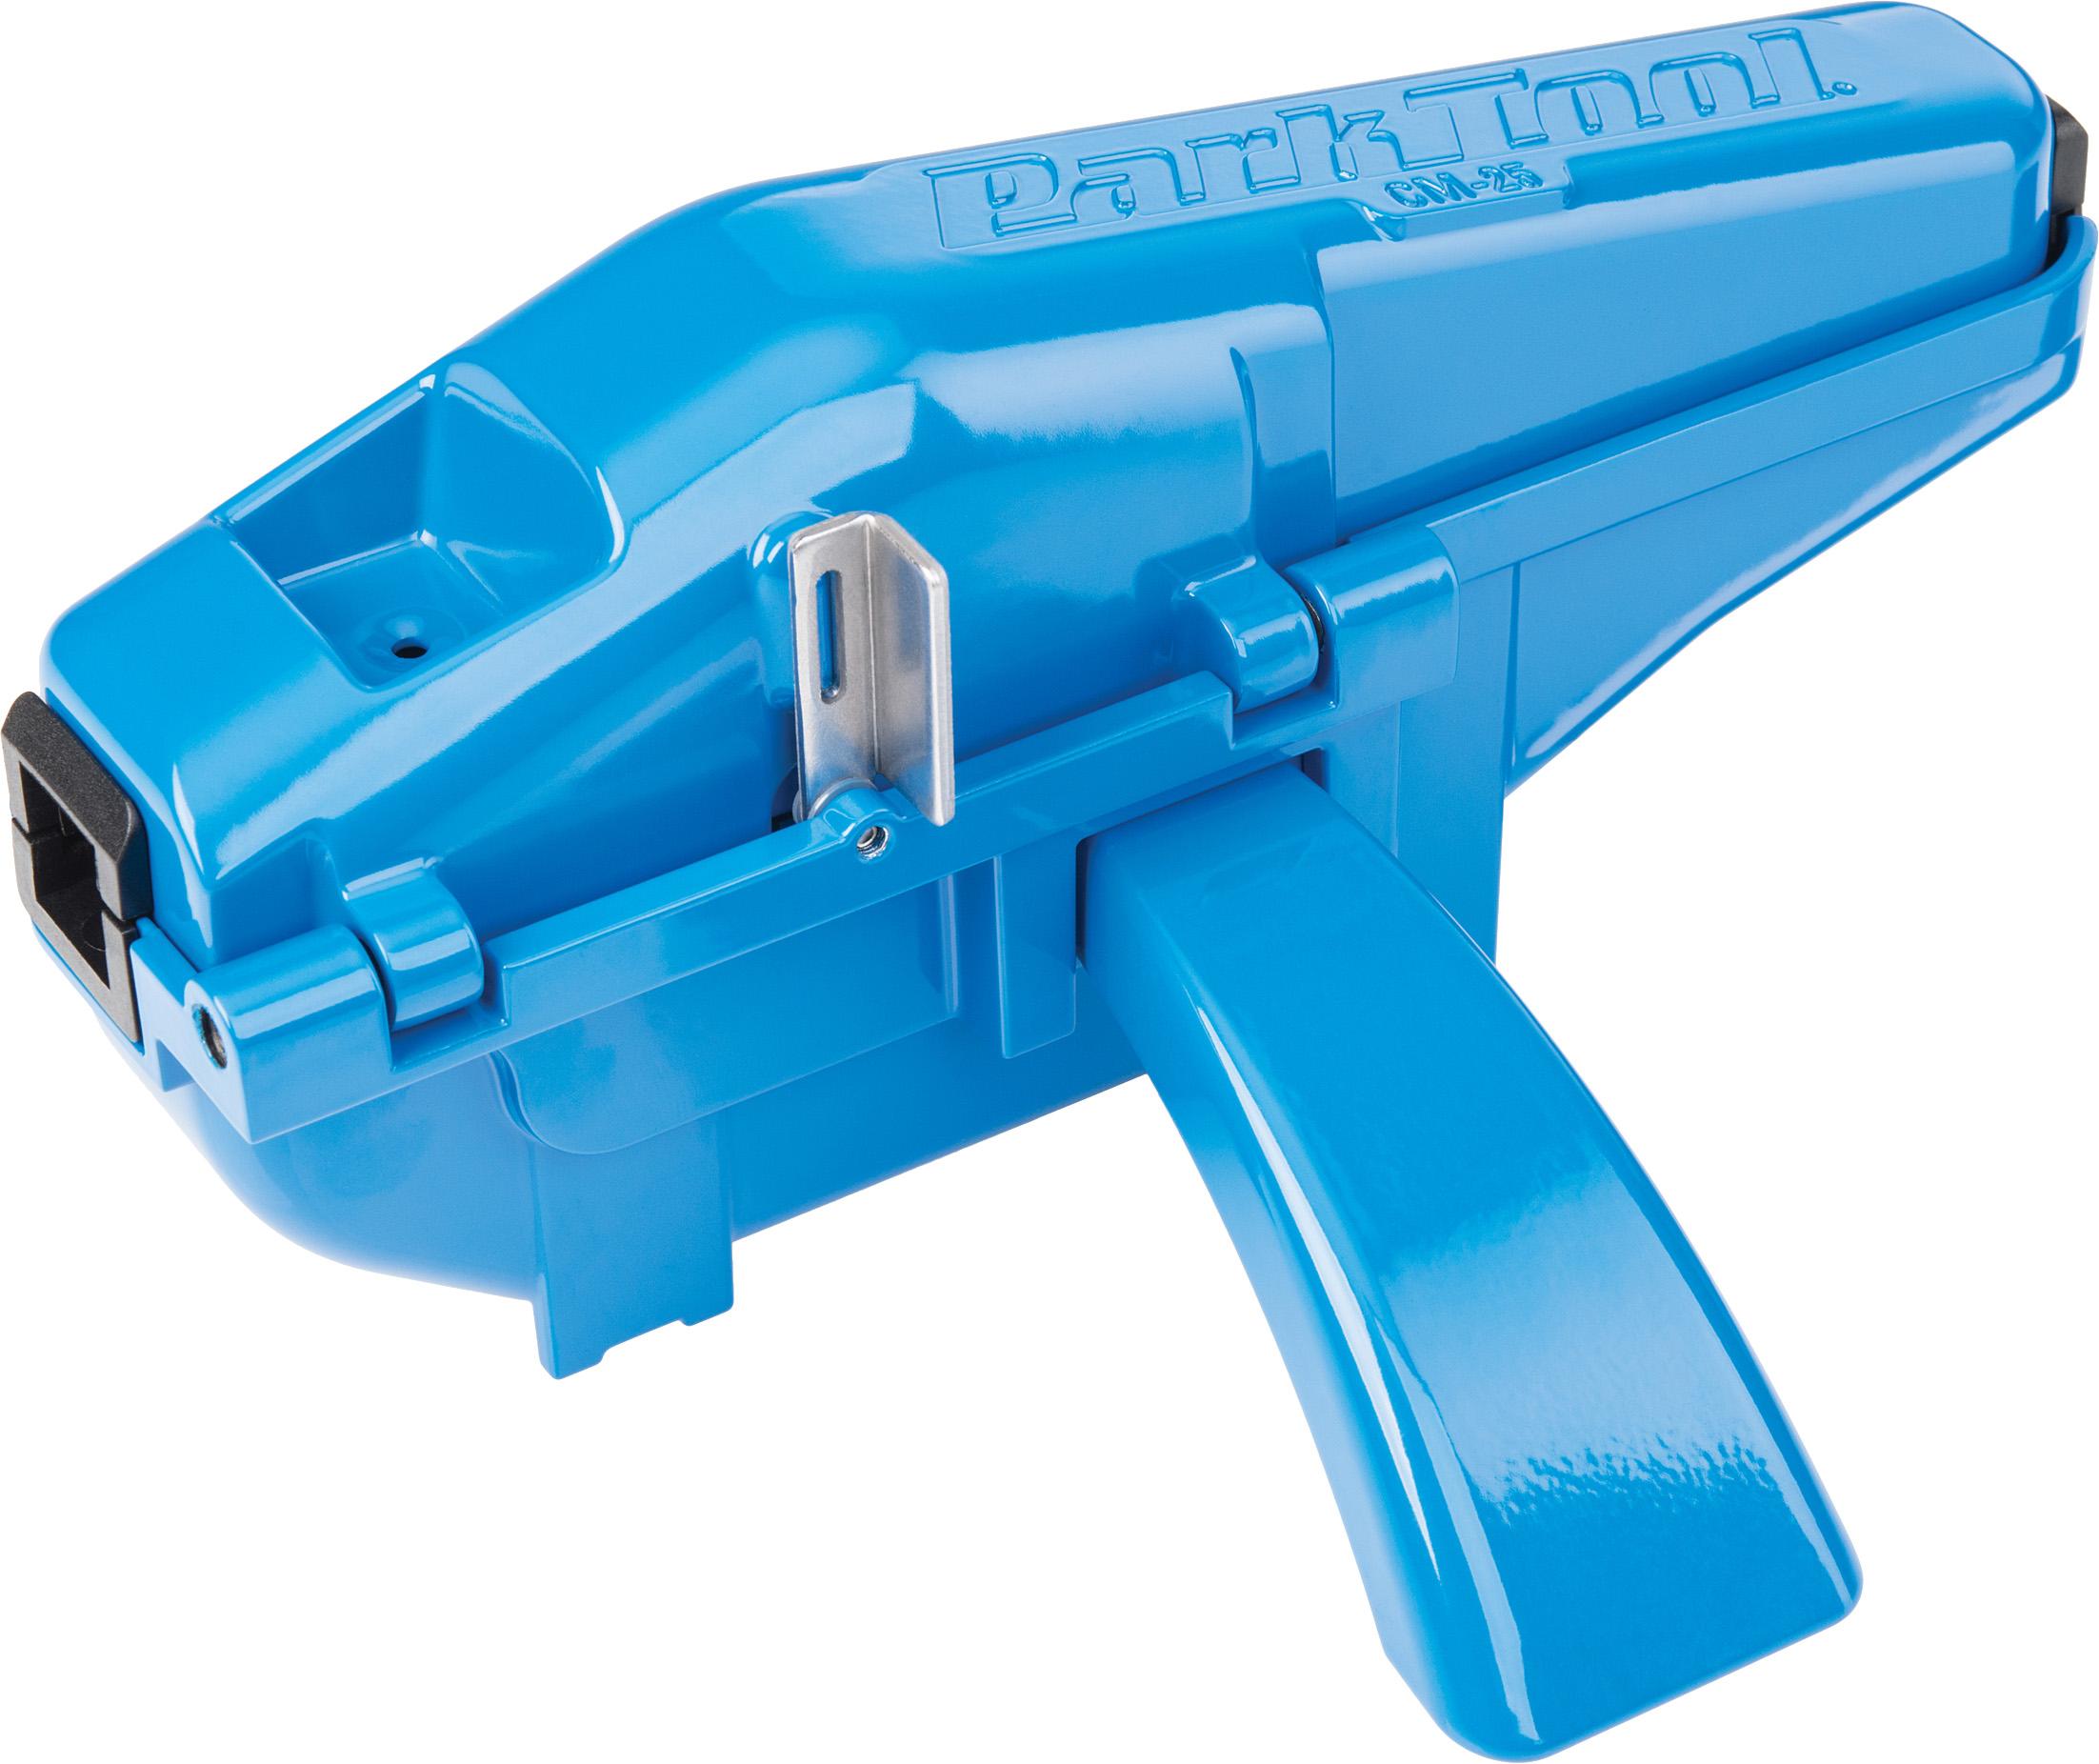 Park Tool Professional Chain Scrubber Cm-25 - Blue